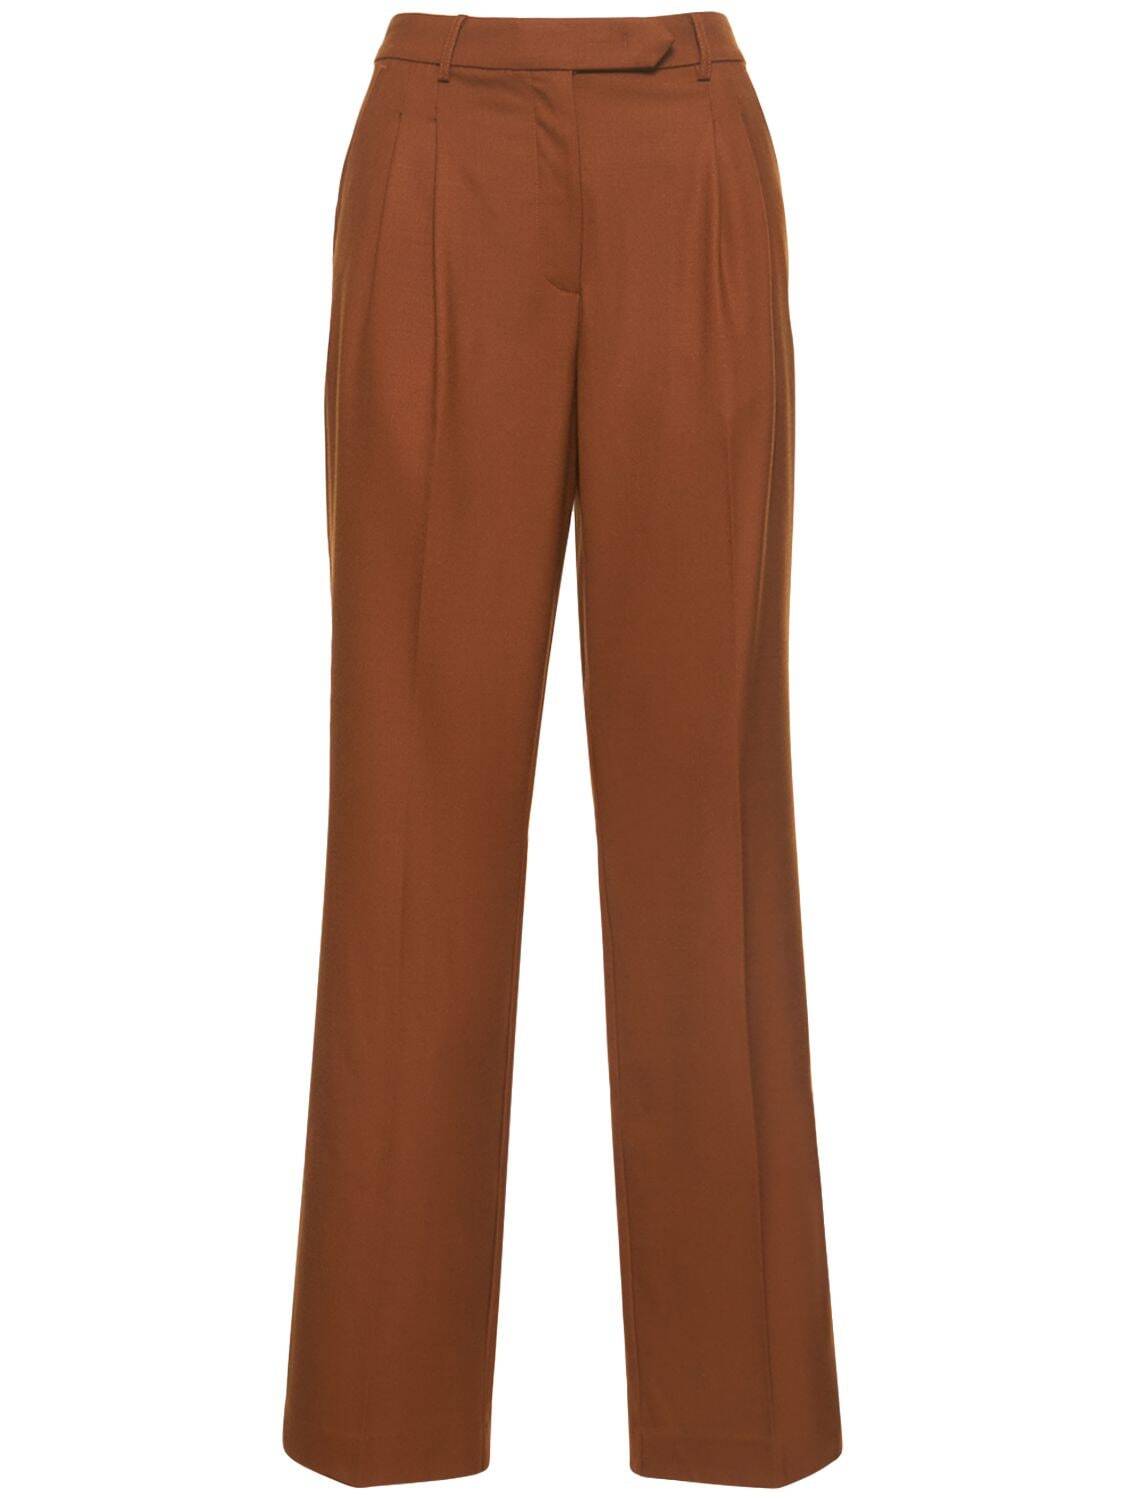 DESIGNERS REMIX Bradford Wool Blend Pants in brown